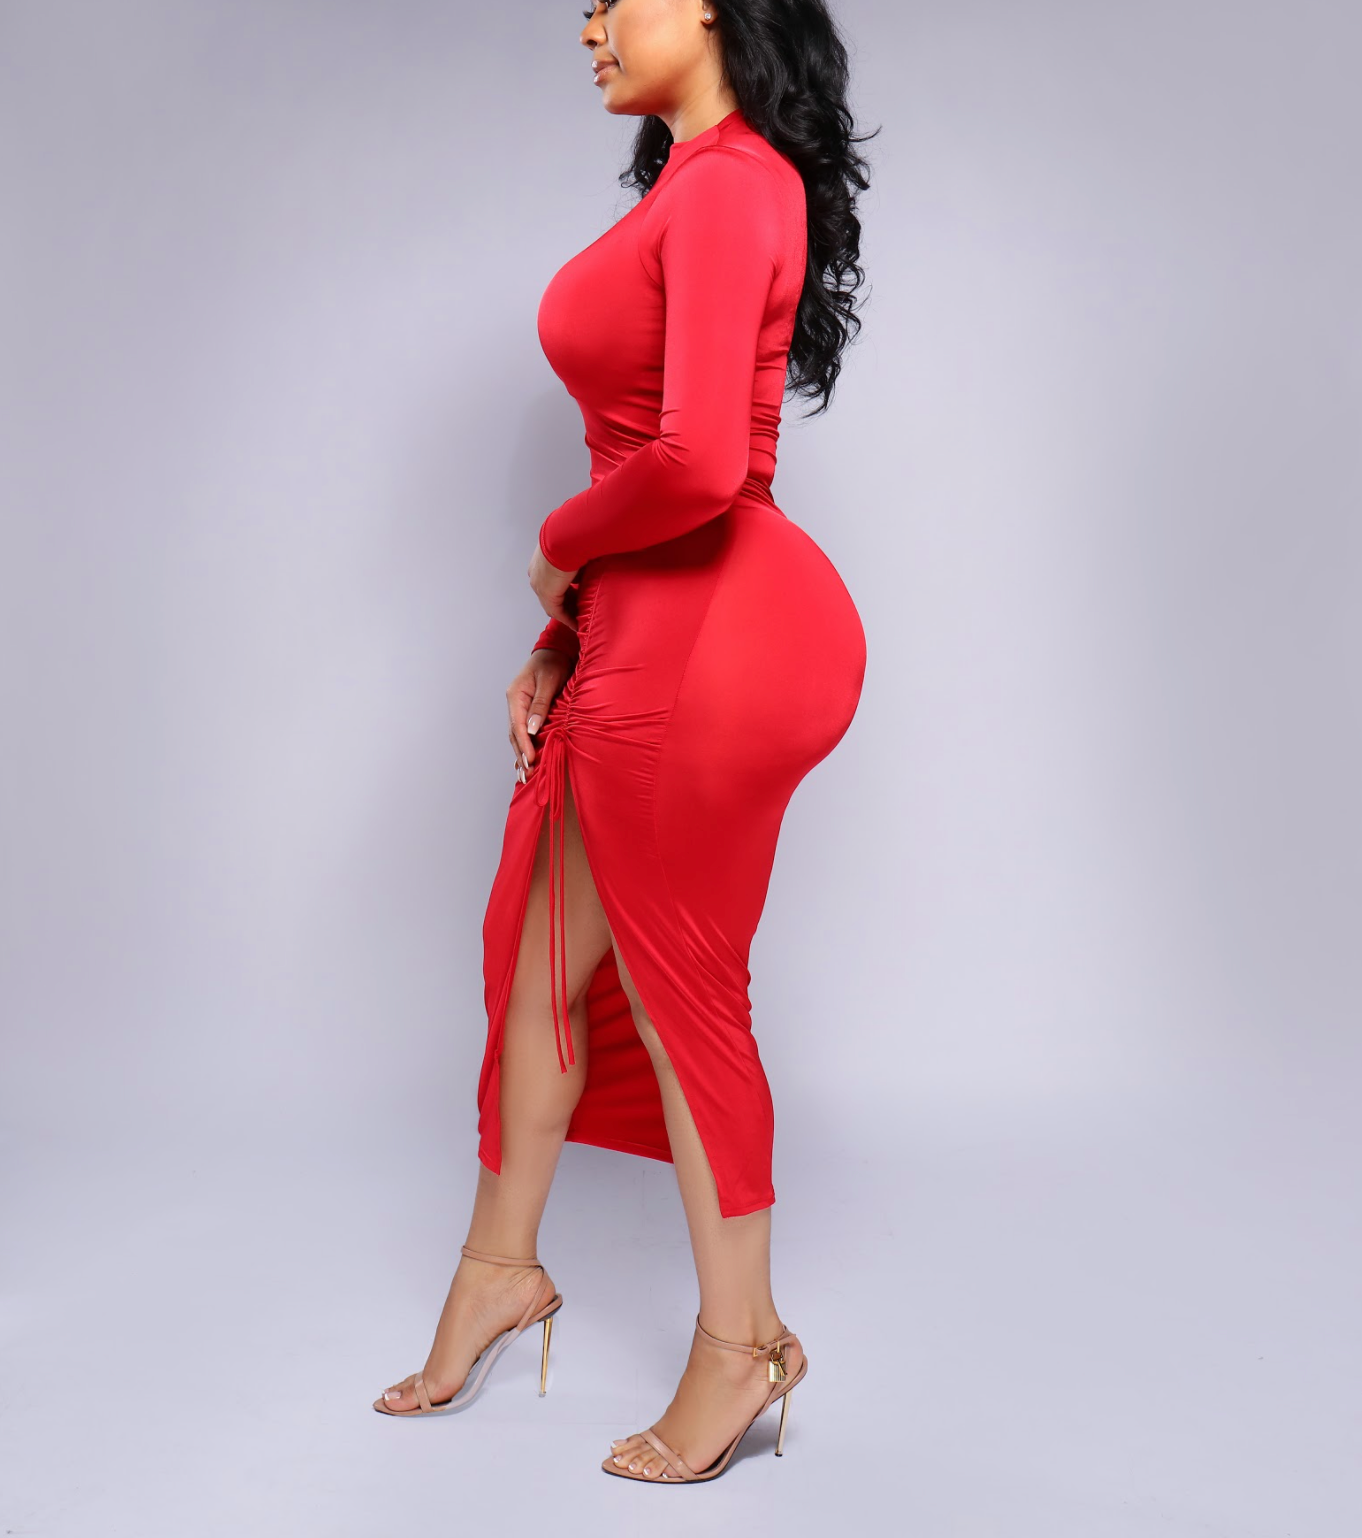 B.Badazz™️ “Lady in Red” Dress